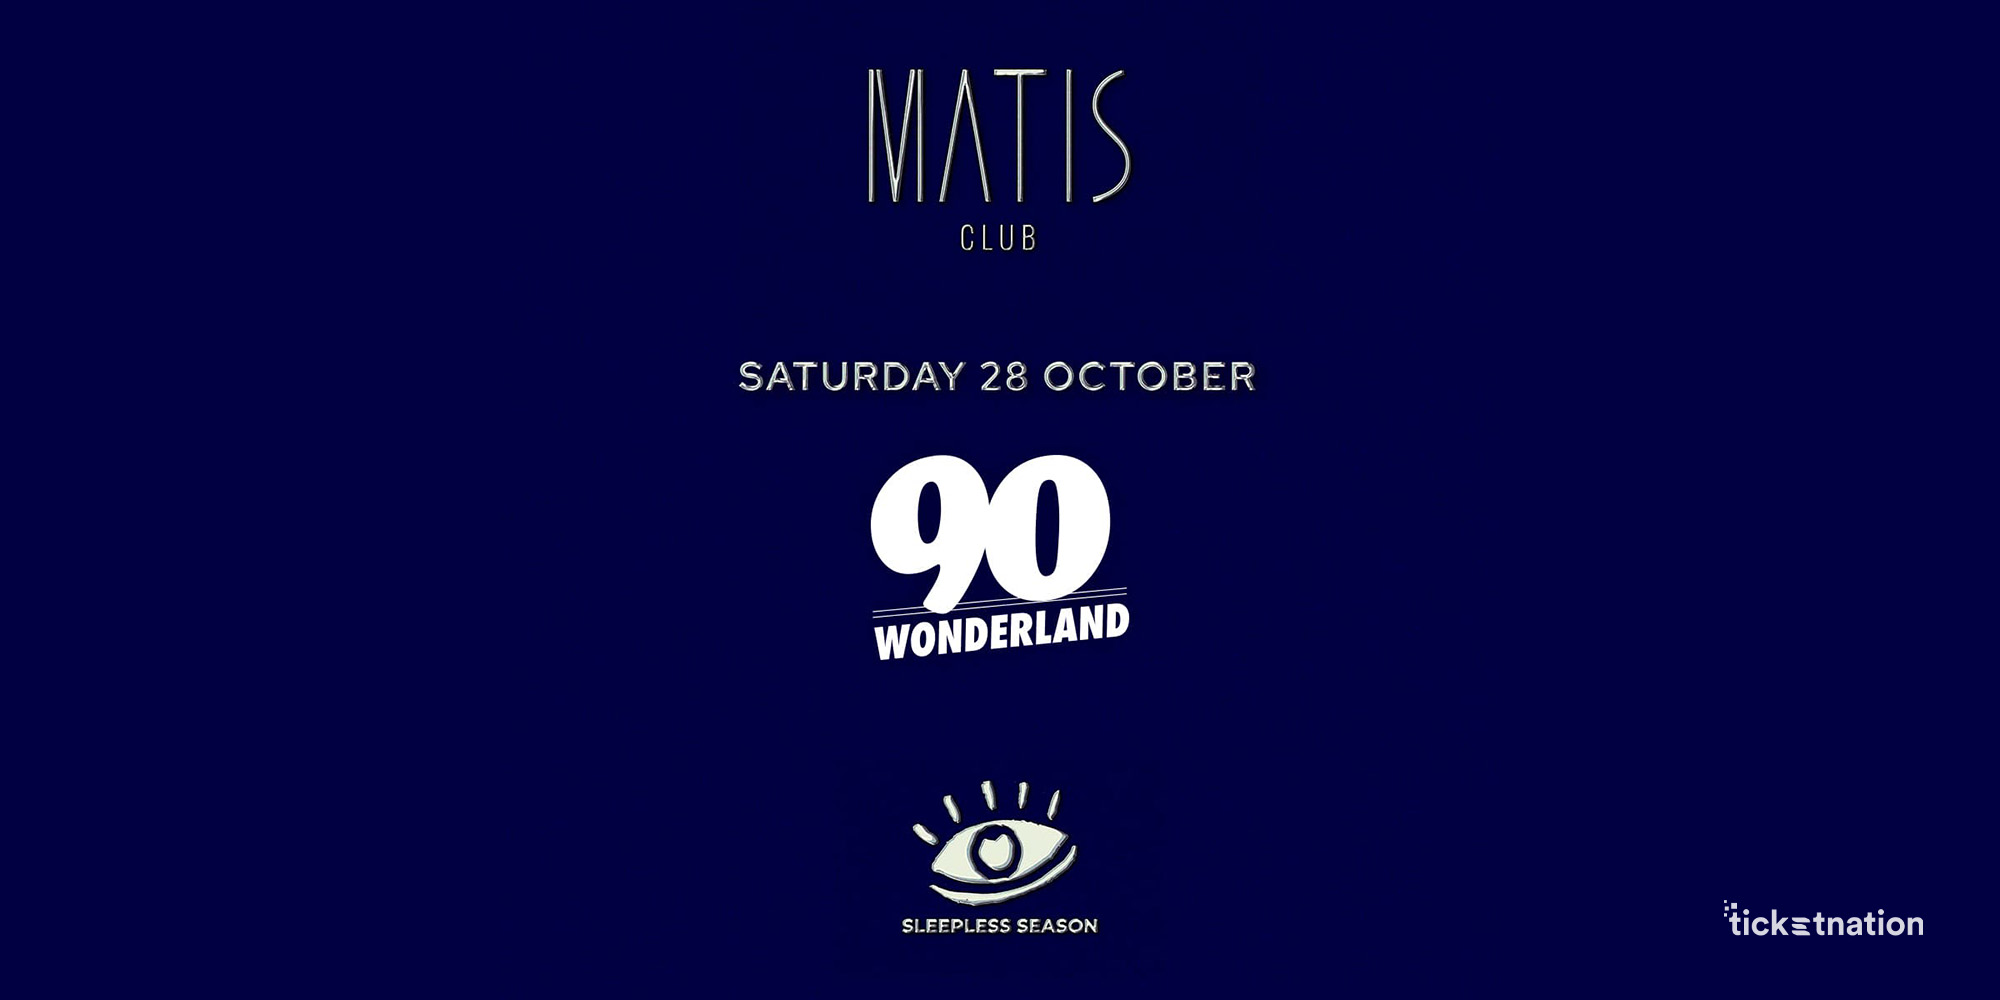 90Wonderland-Matis Club-28-10-23